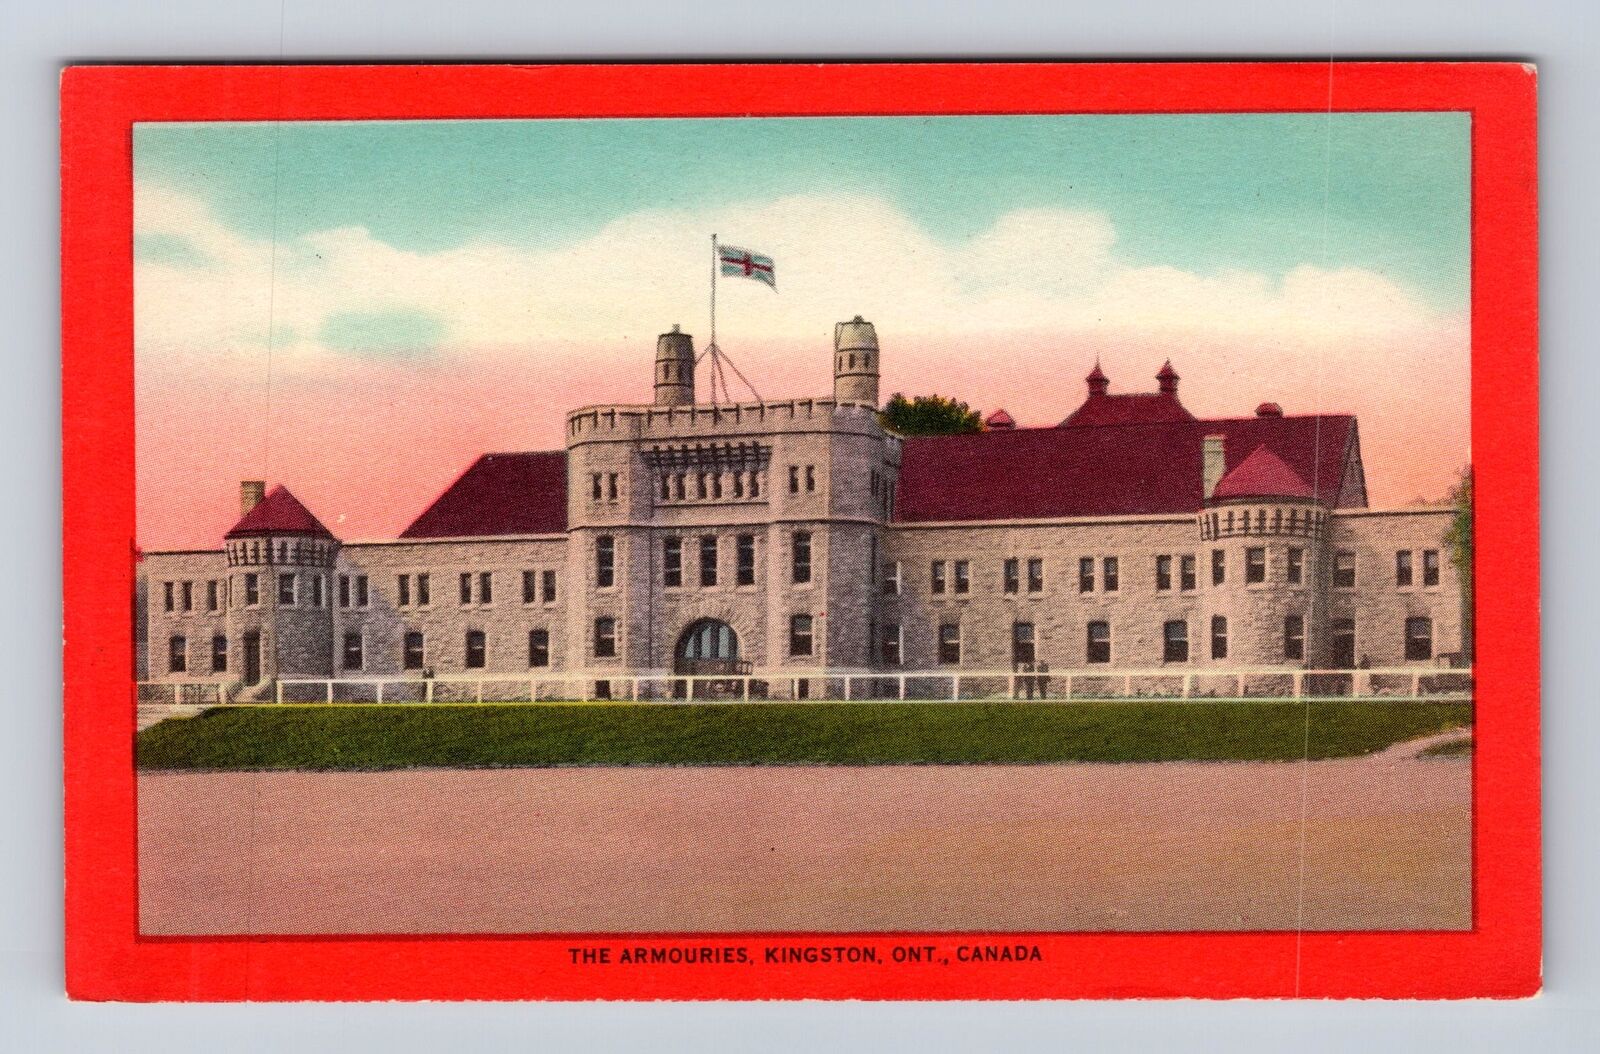 Kingston Ontario-Canada, the Armouries, Antique Vintage Souvenir Postcard